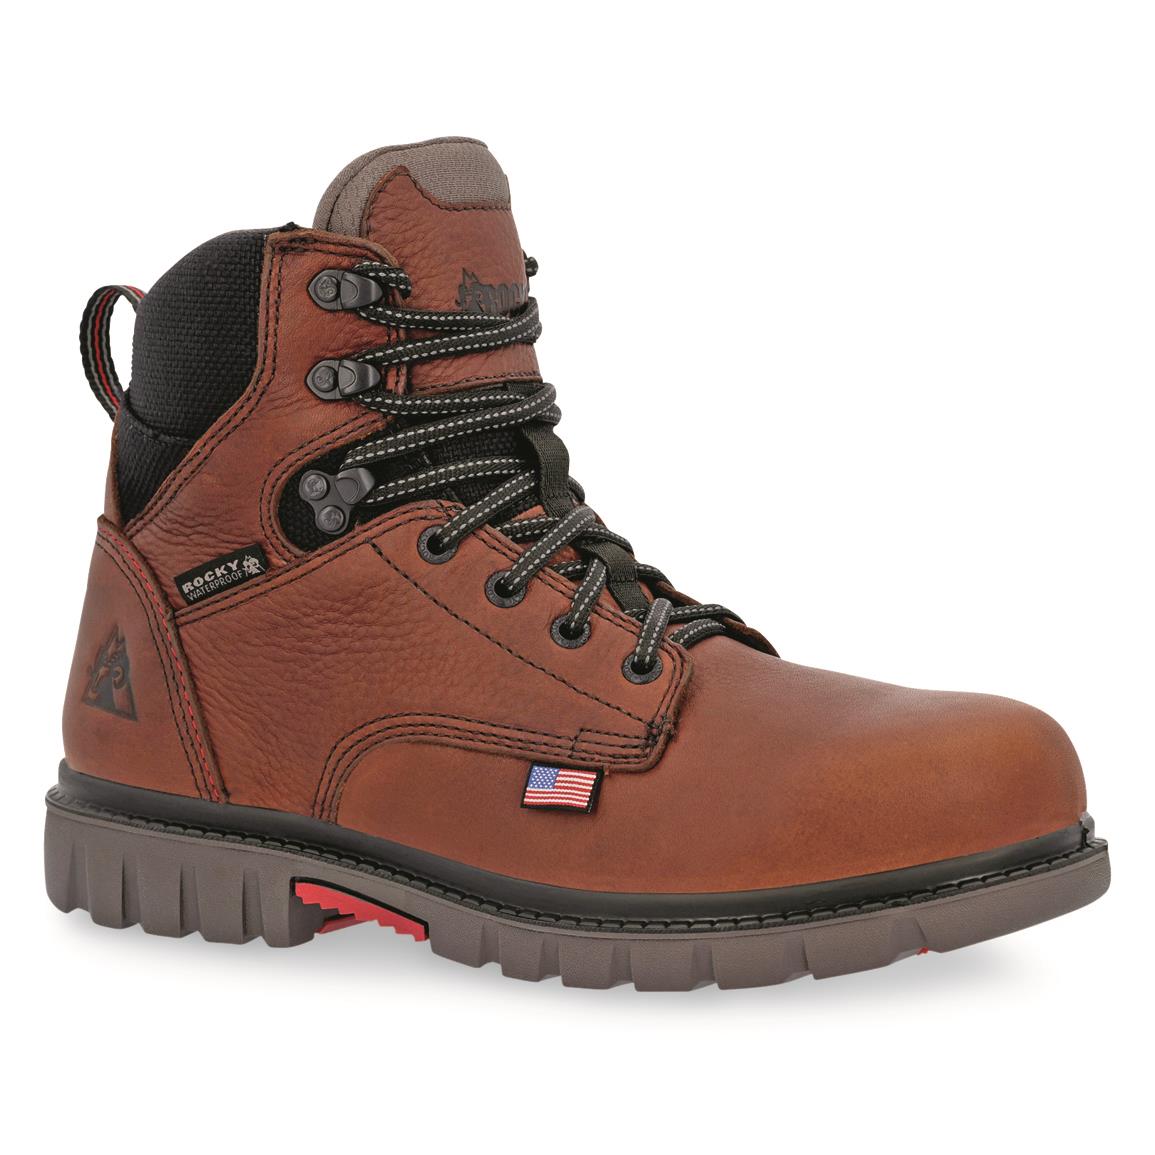 Rocky Men's Worksmart USA 6" Waterproof Safety Toe Work Boots, Brown